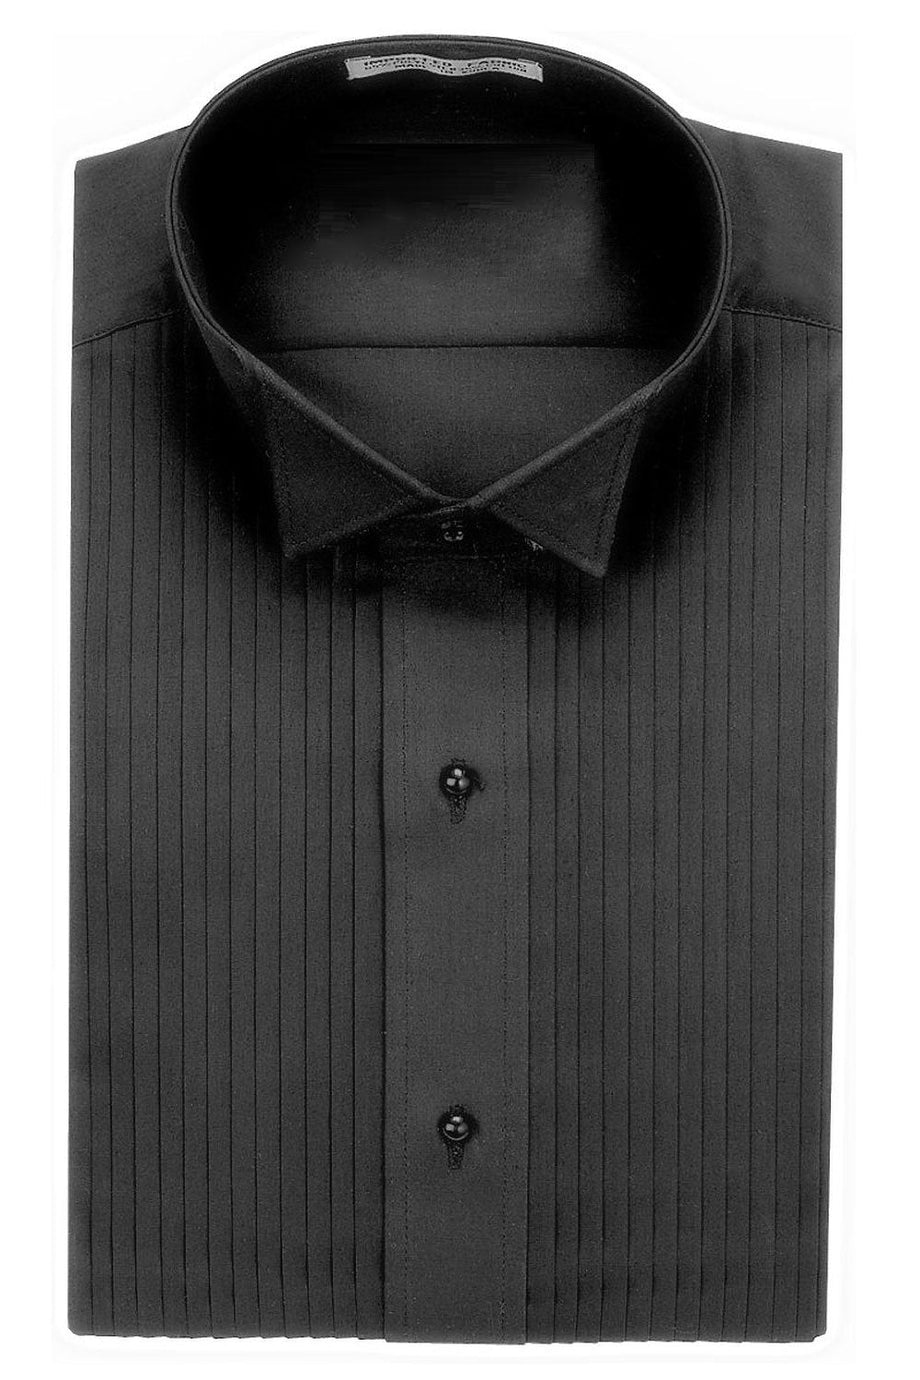 Classic Collection "Thadeus" Black Pleated Wingtip Tuxedo Shirt